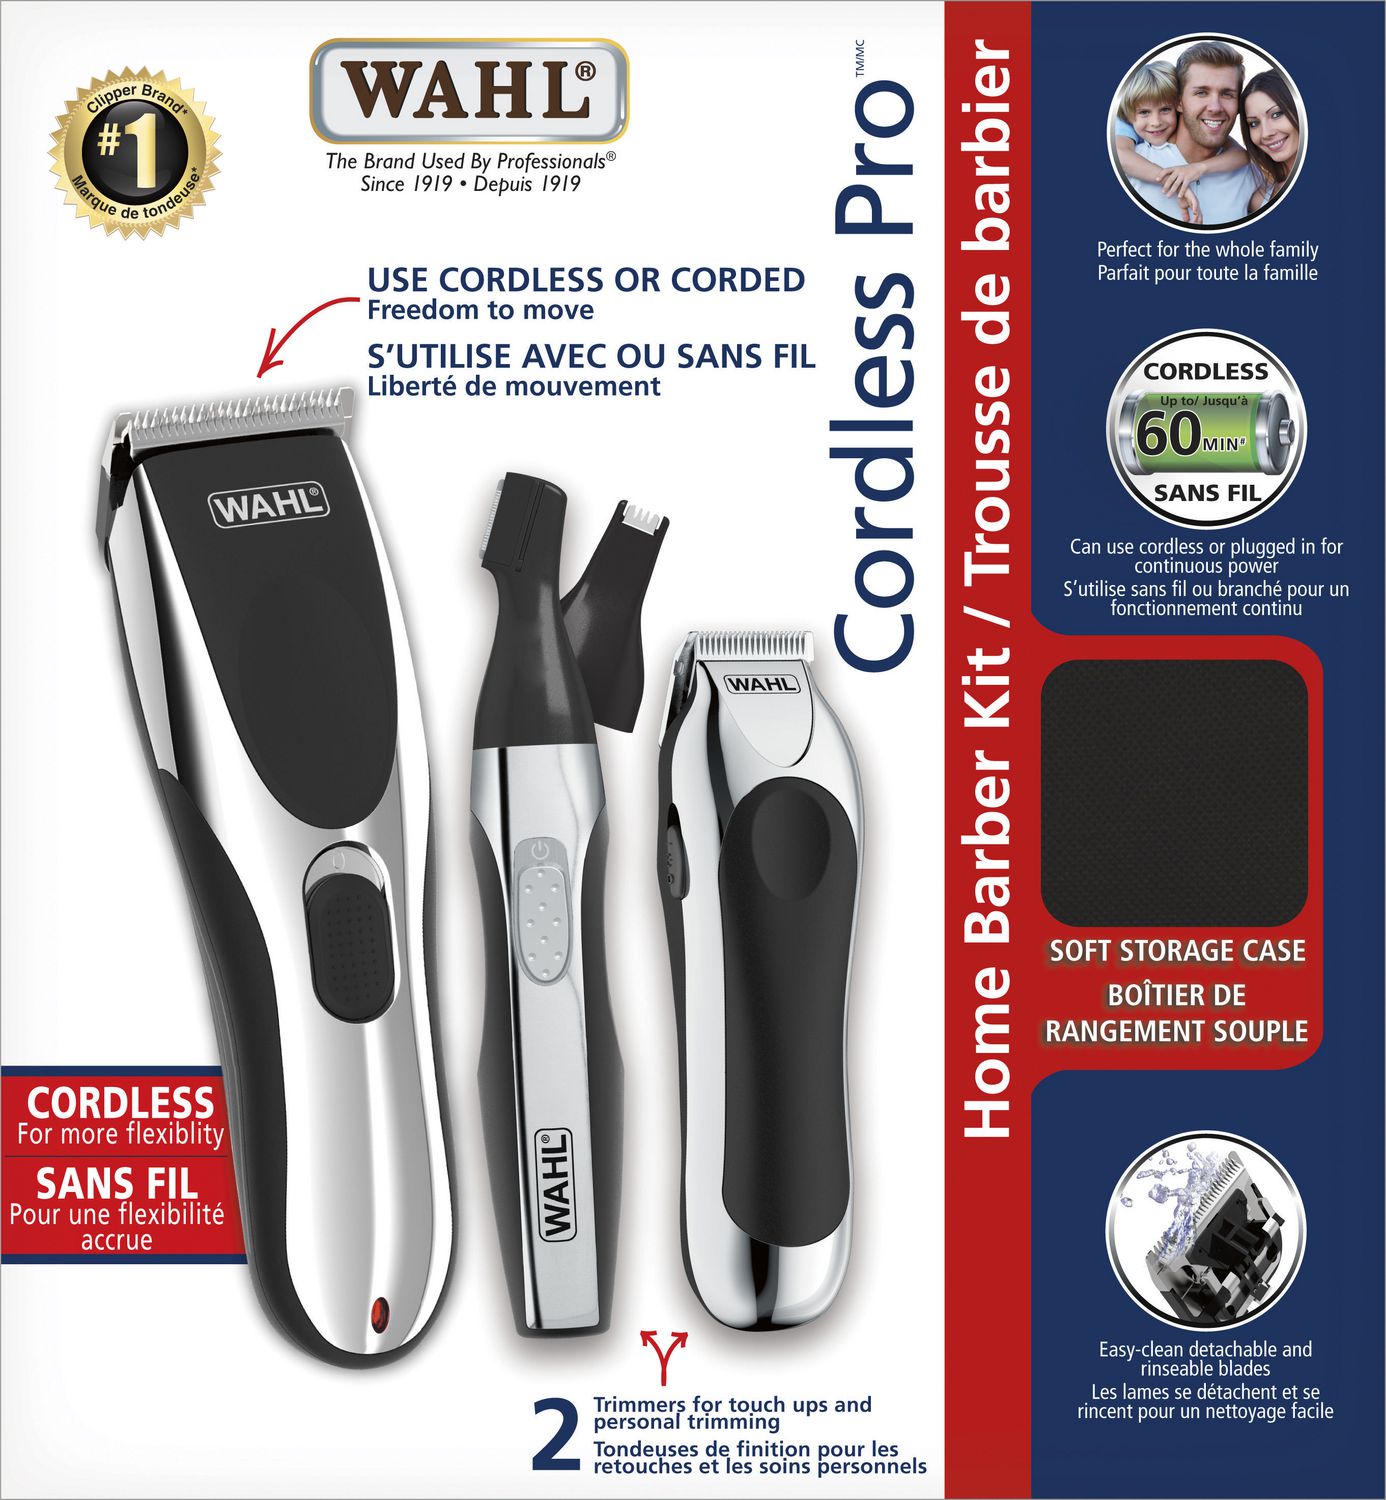 wahl cordless pro home barber kit